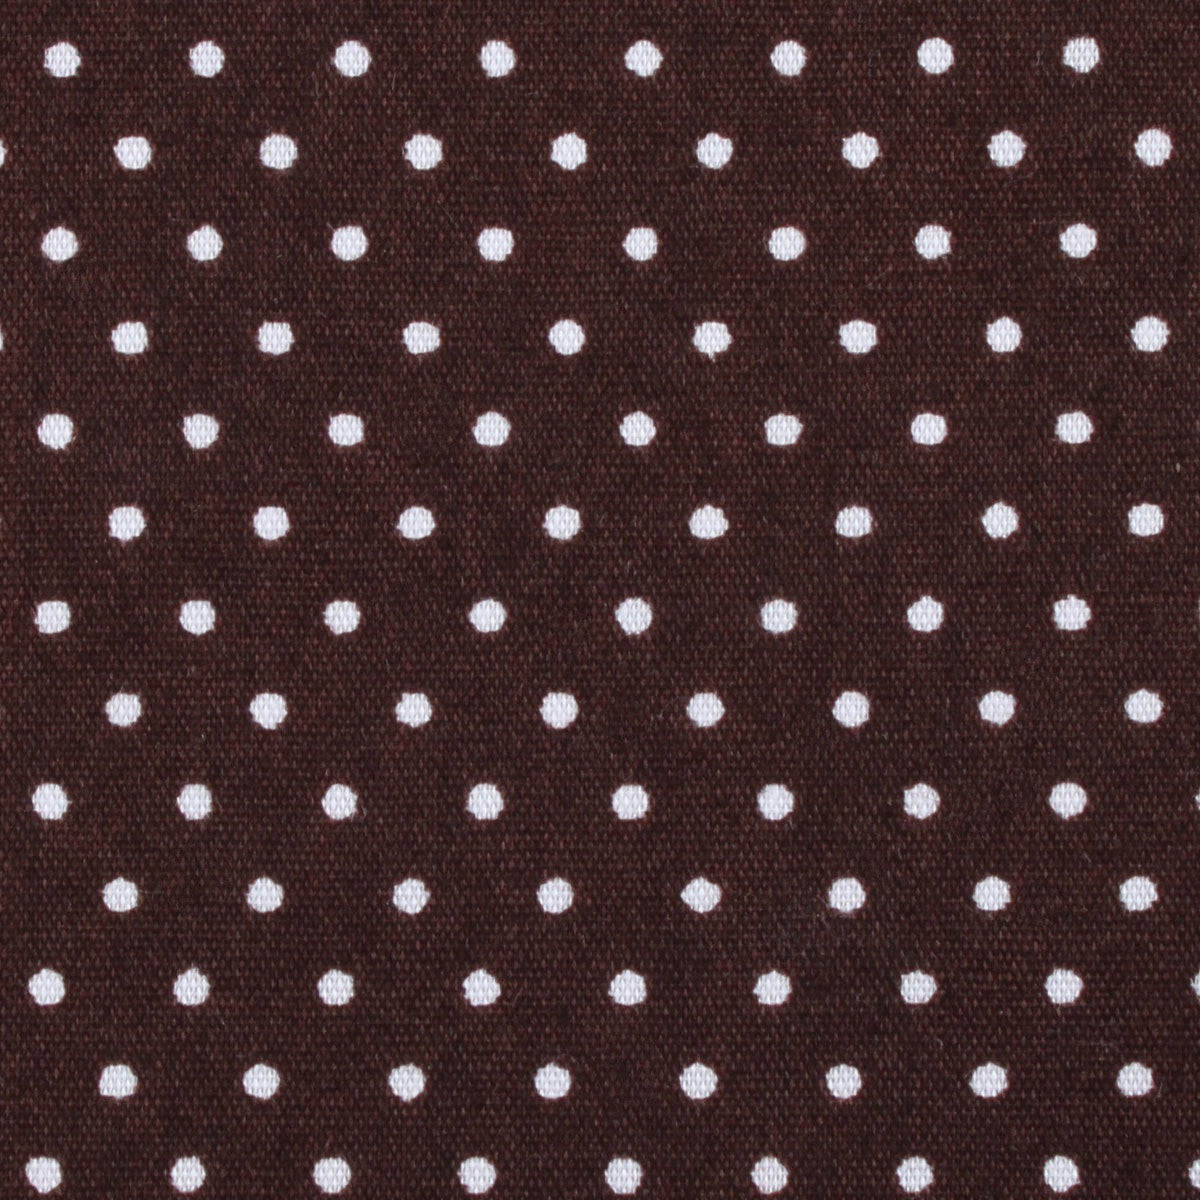 Lungo Brown Polkadot Cotton Fabric Skinny Tie